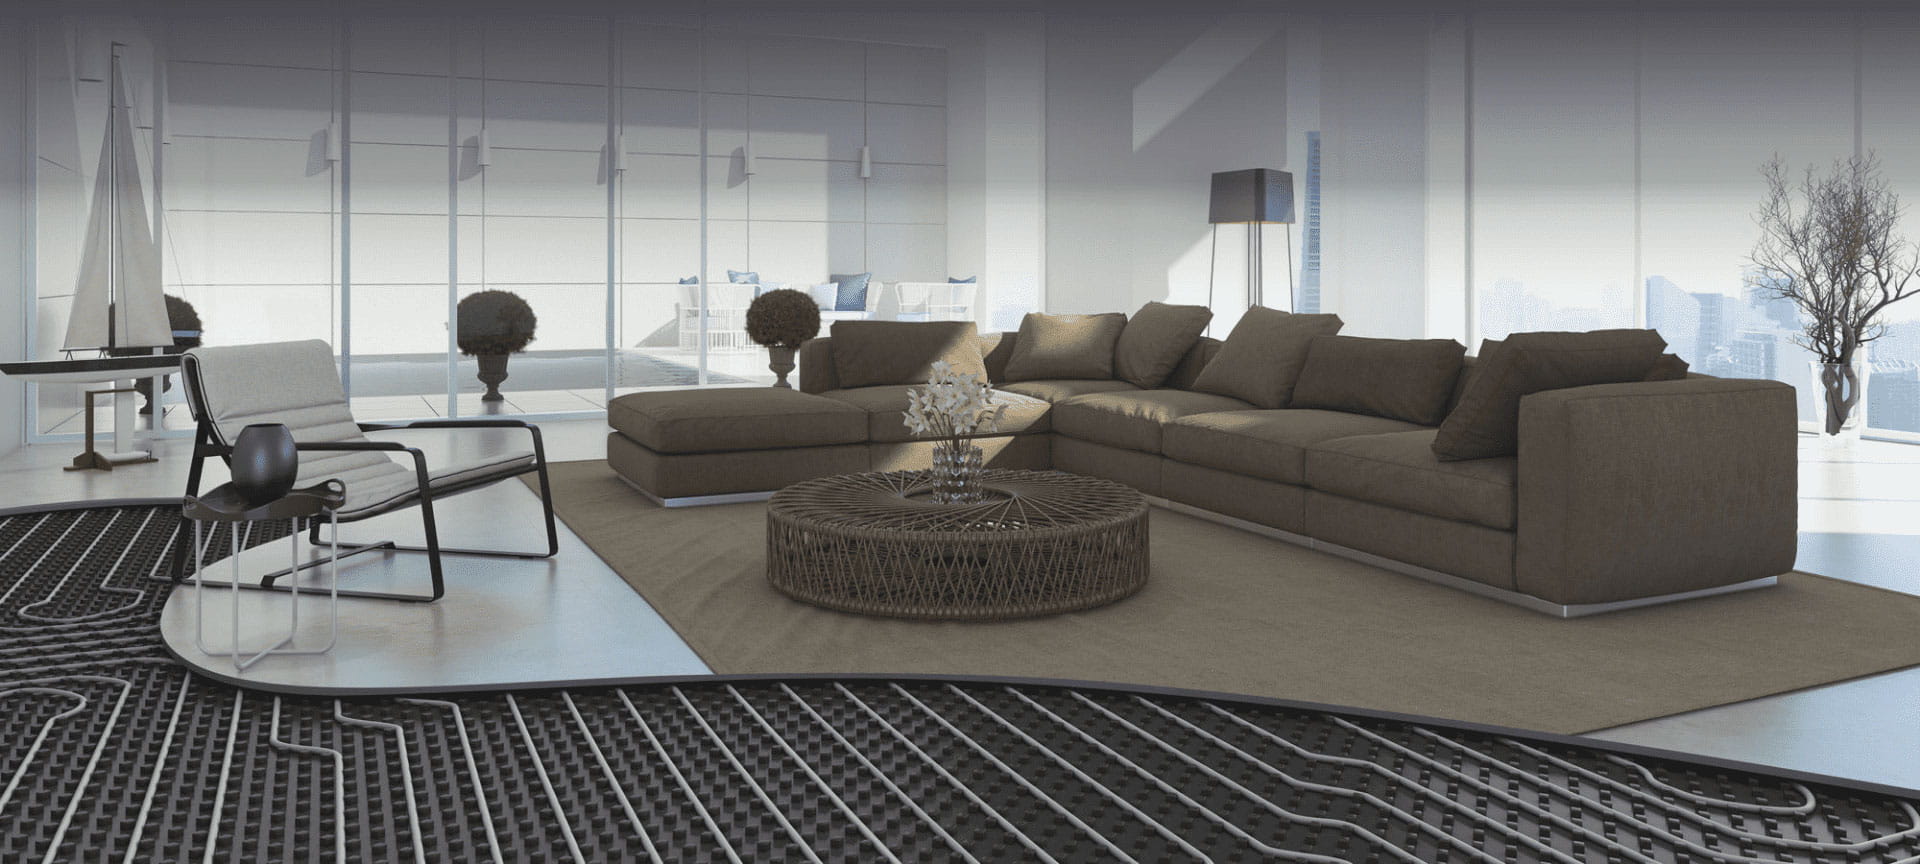 living room with underfloor heating